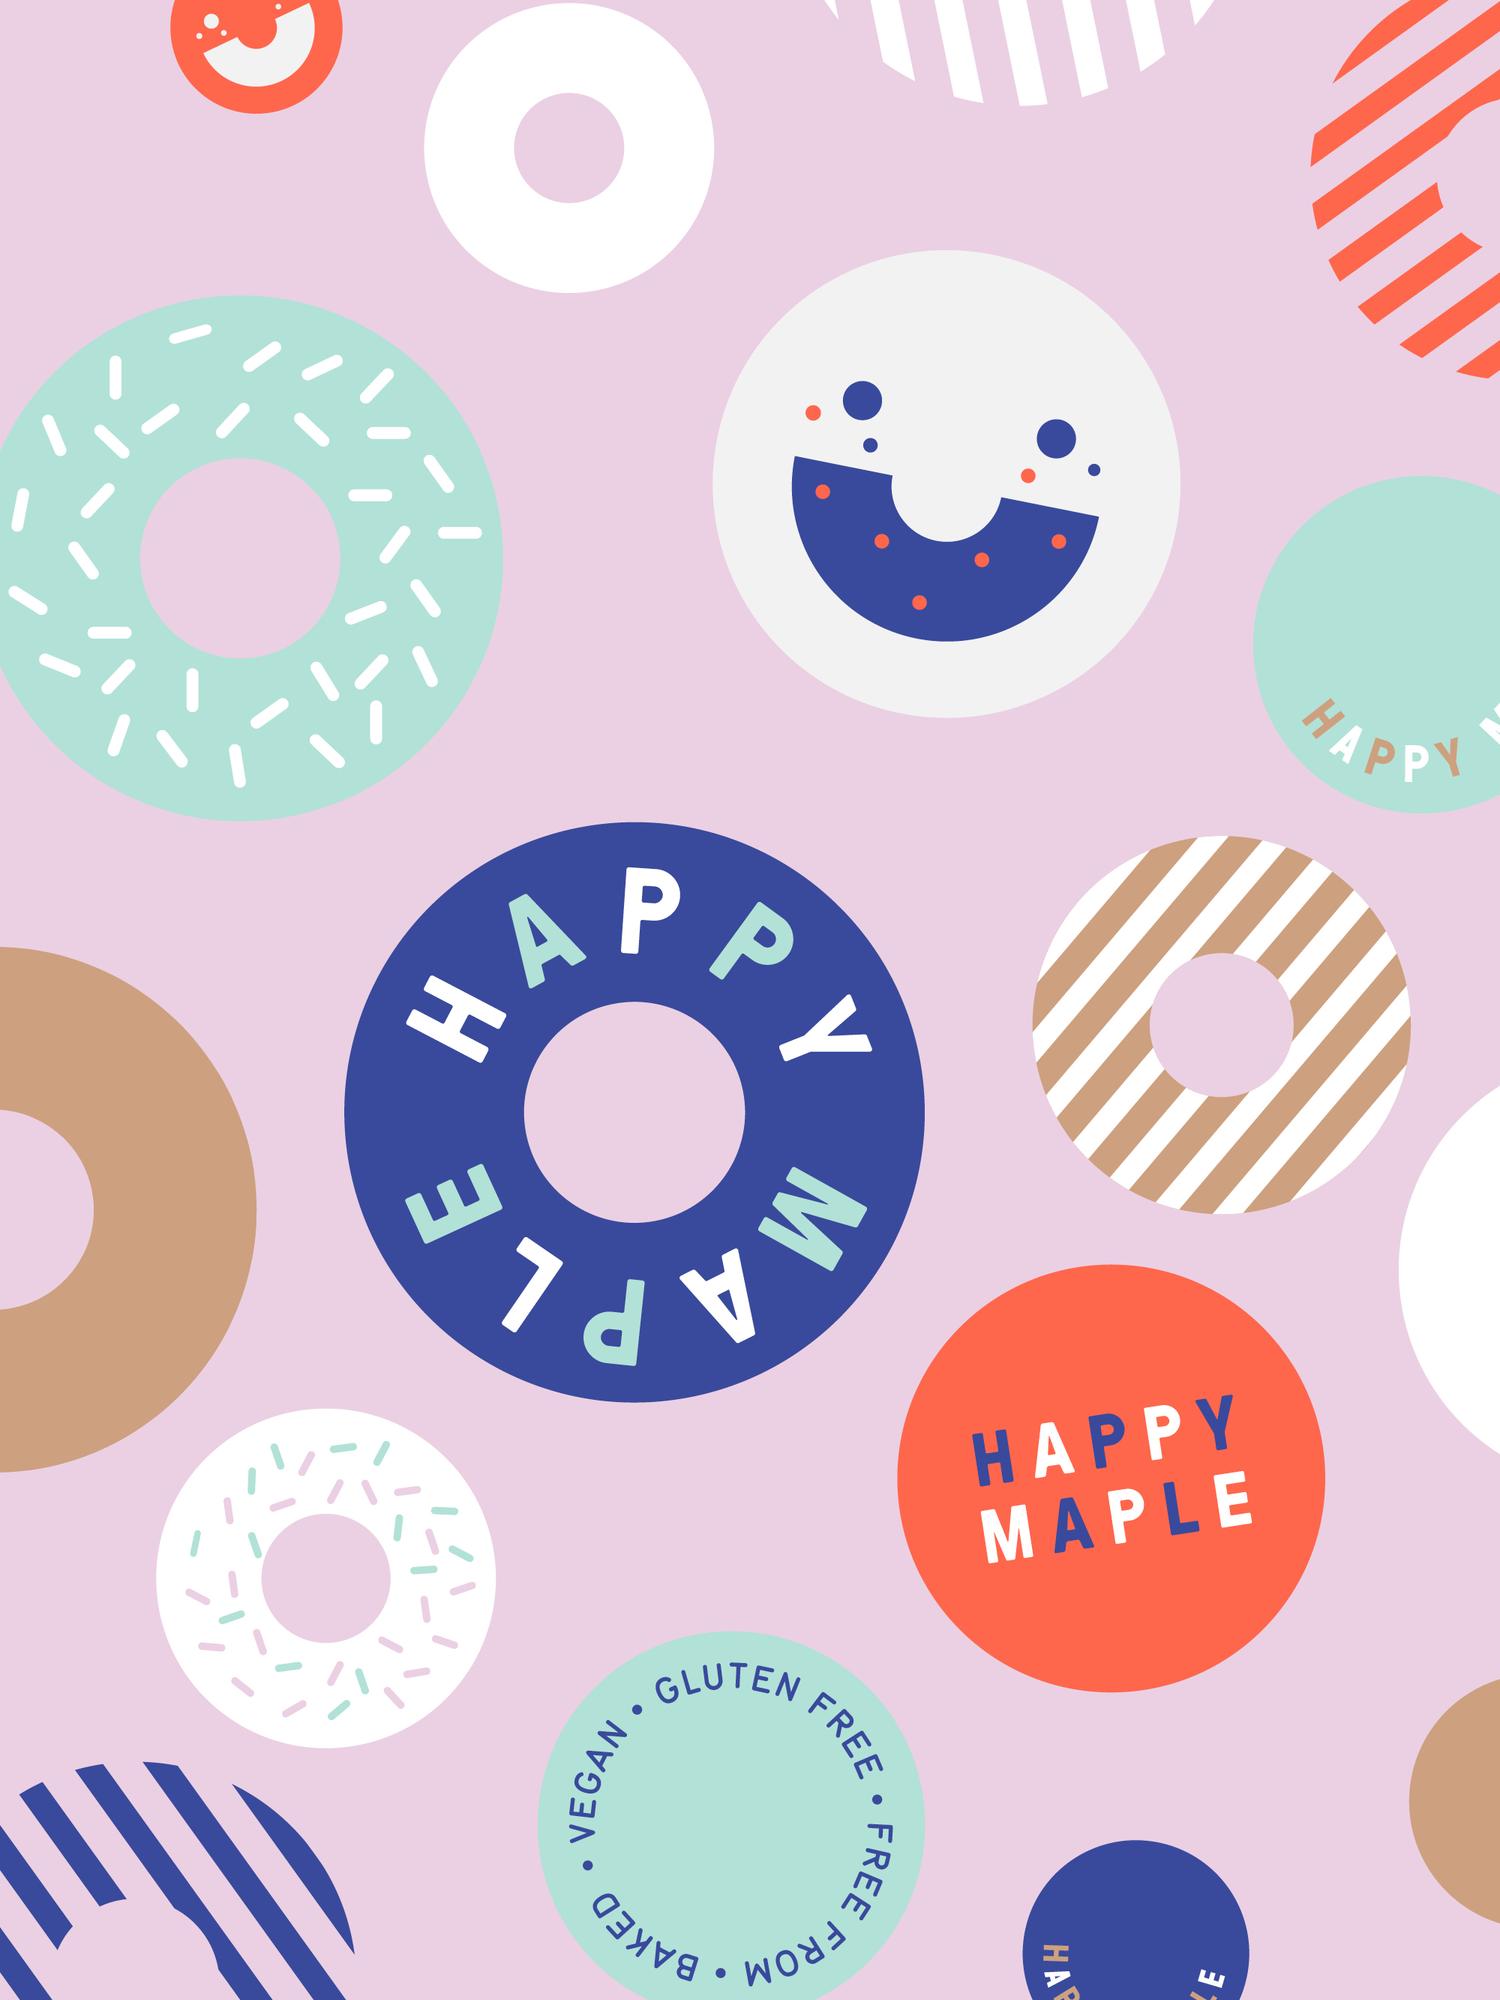 Brand identity, logo and illustration by Sydney-based graphic design studio Garbett for donut bakery Happy Maple. 